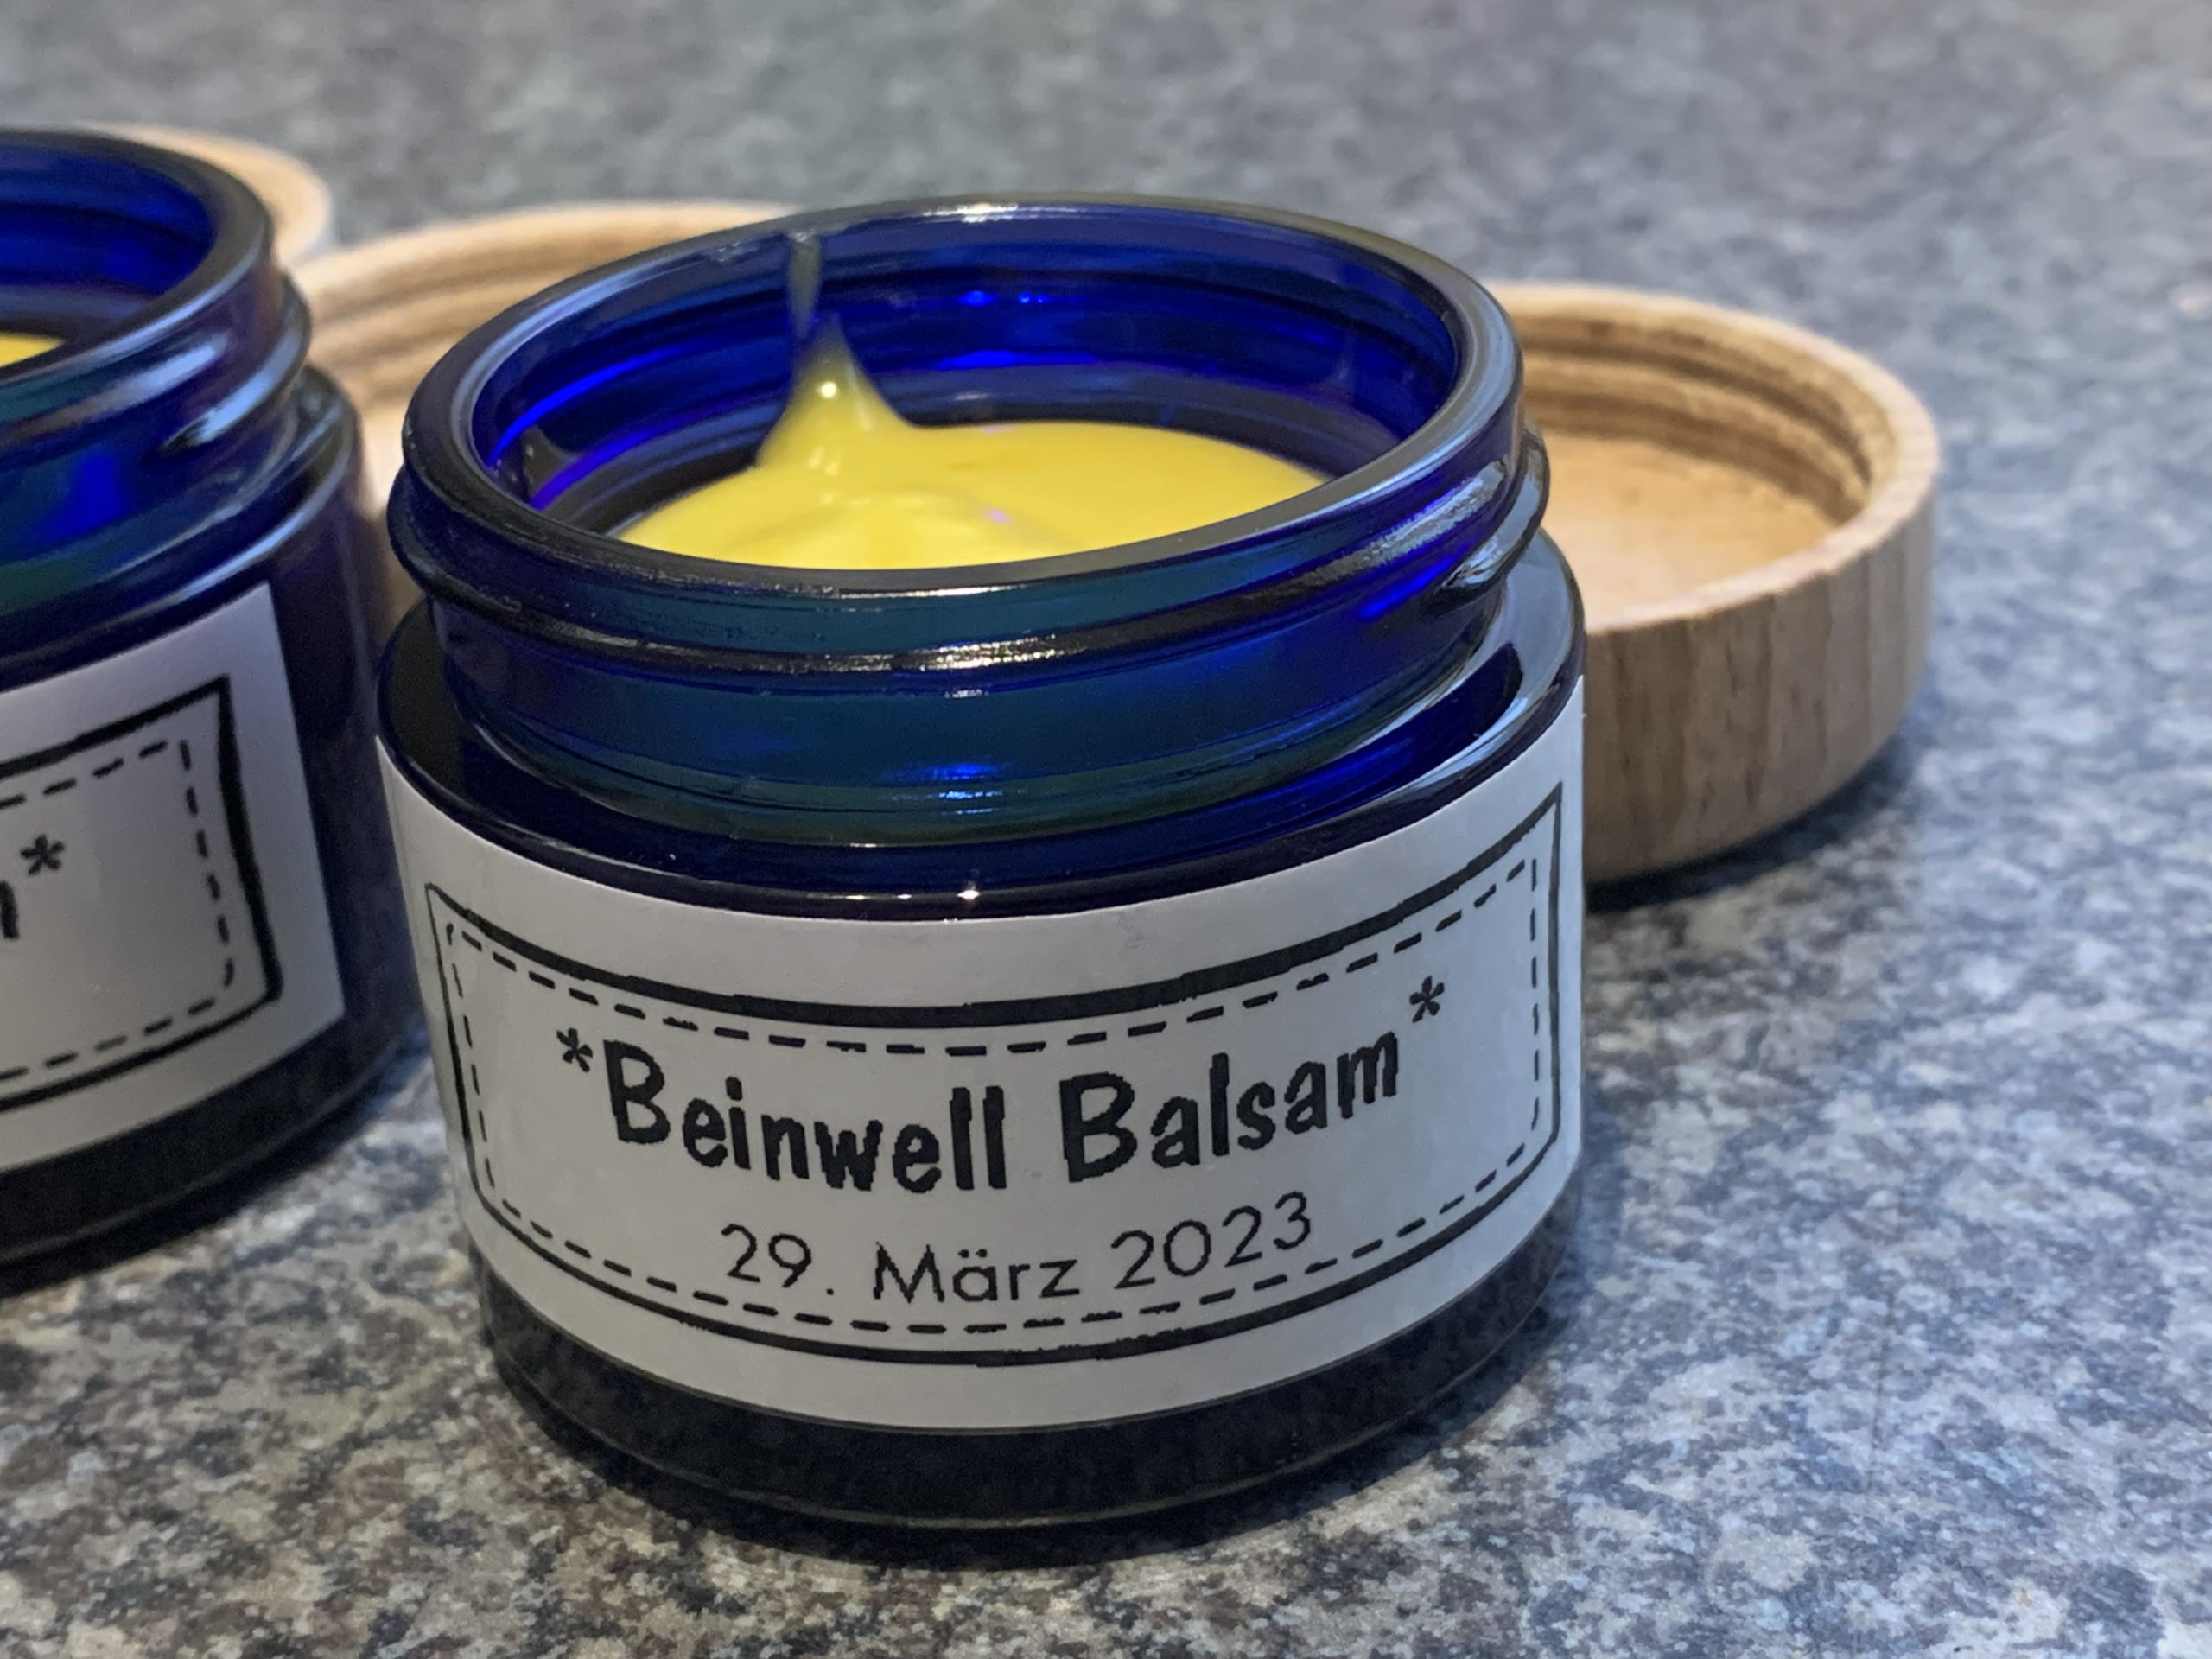 Beinwell Balsam